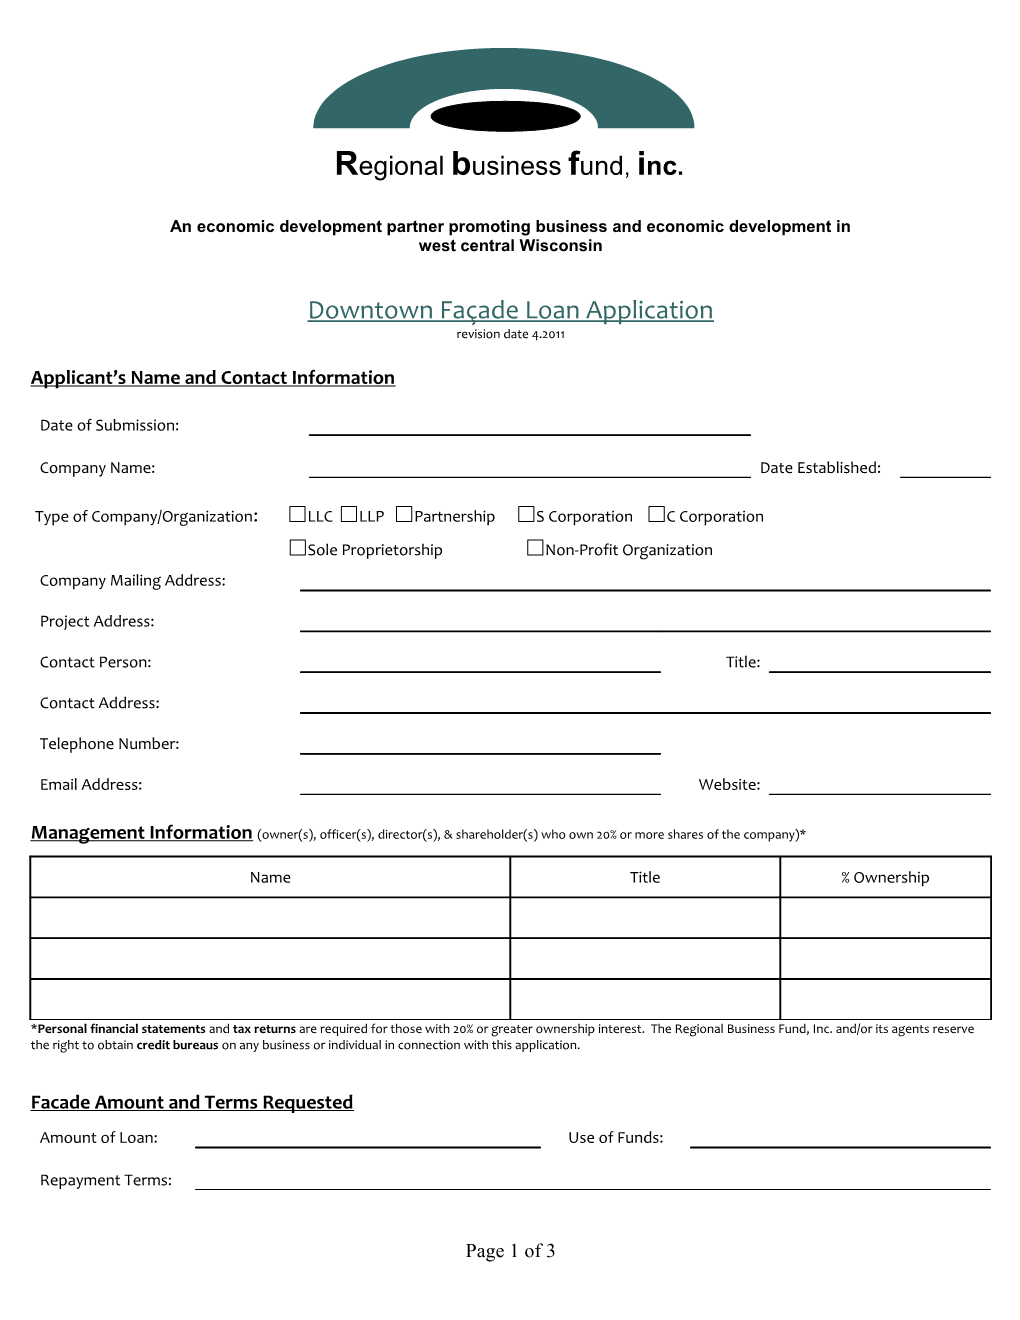 Regional Business Fund, Inc